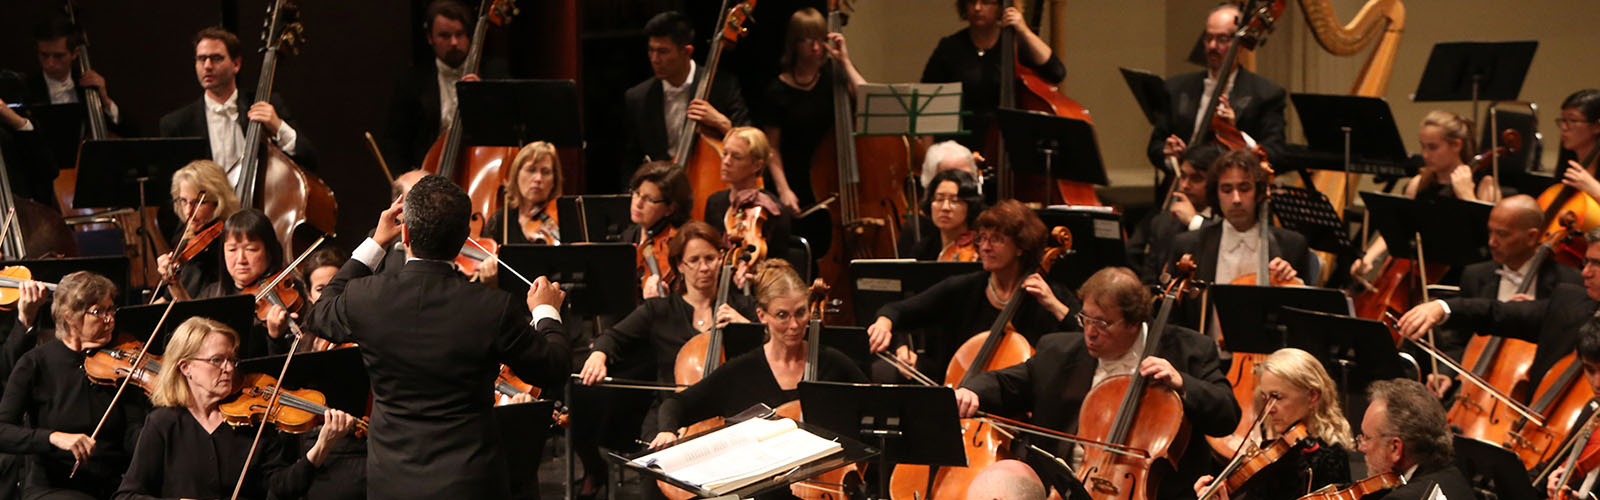 Sacramento Philharmonic & opera in concert